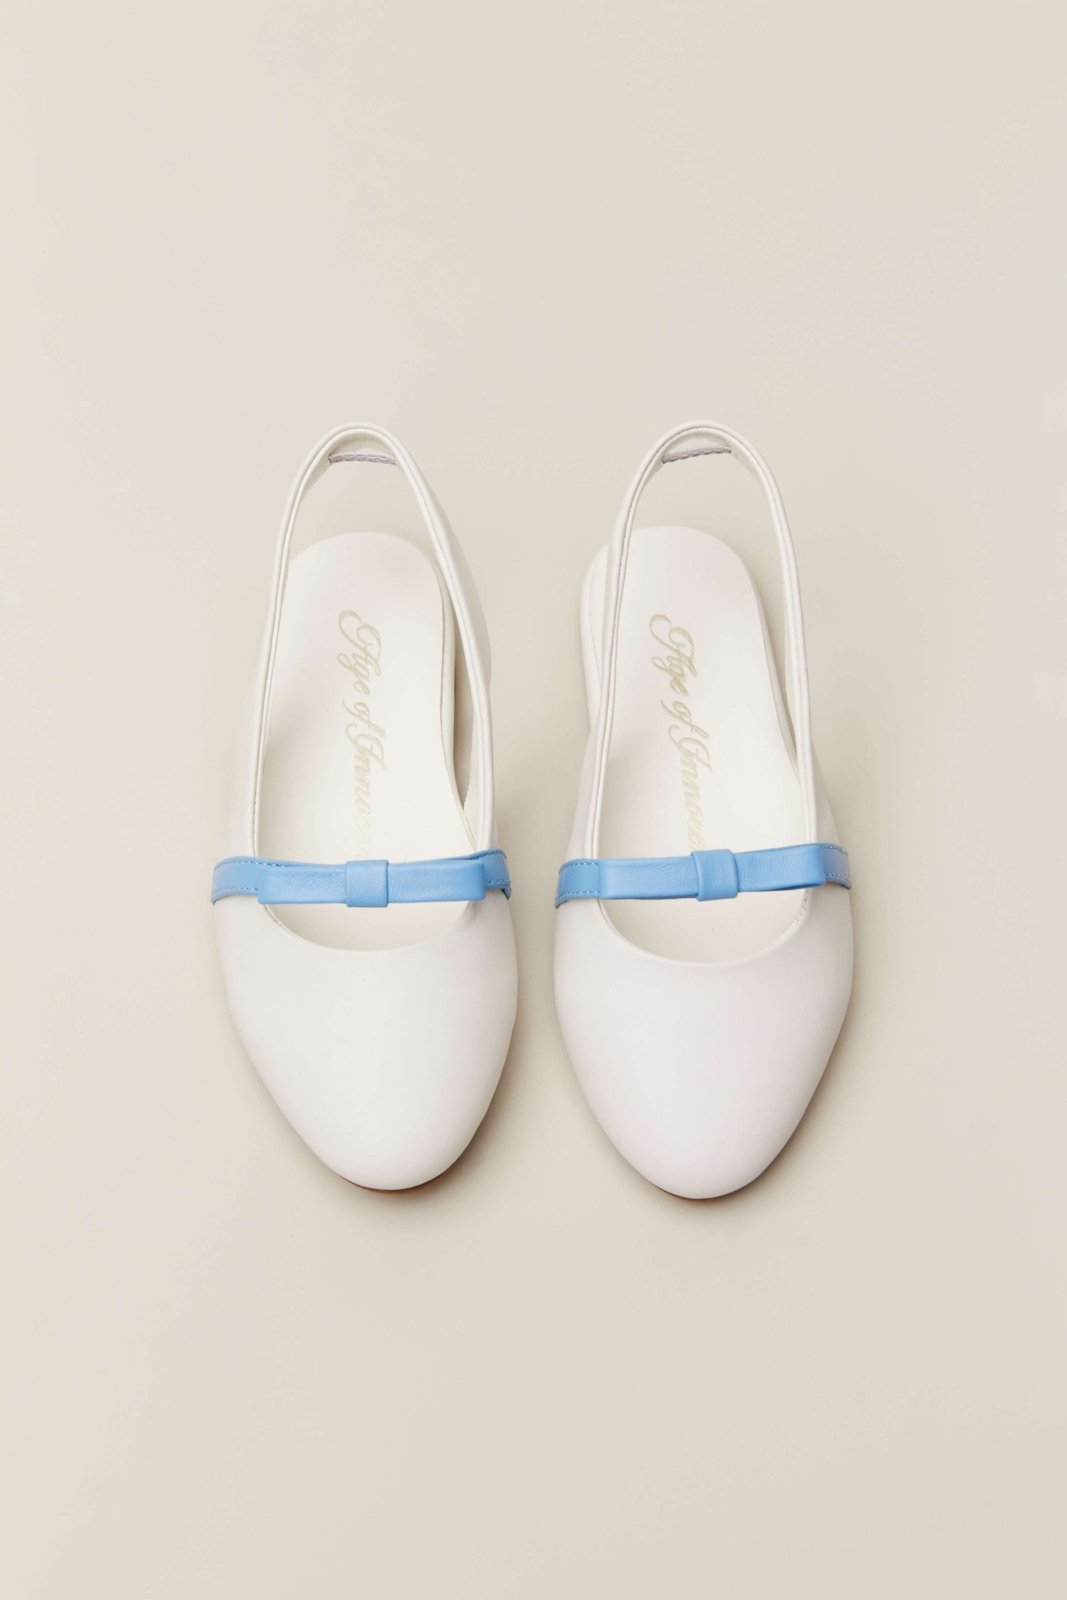 Carlota White/Blue Ballerinas by Age of Innocence